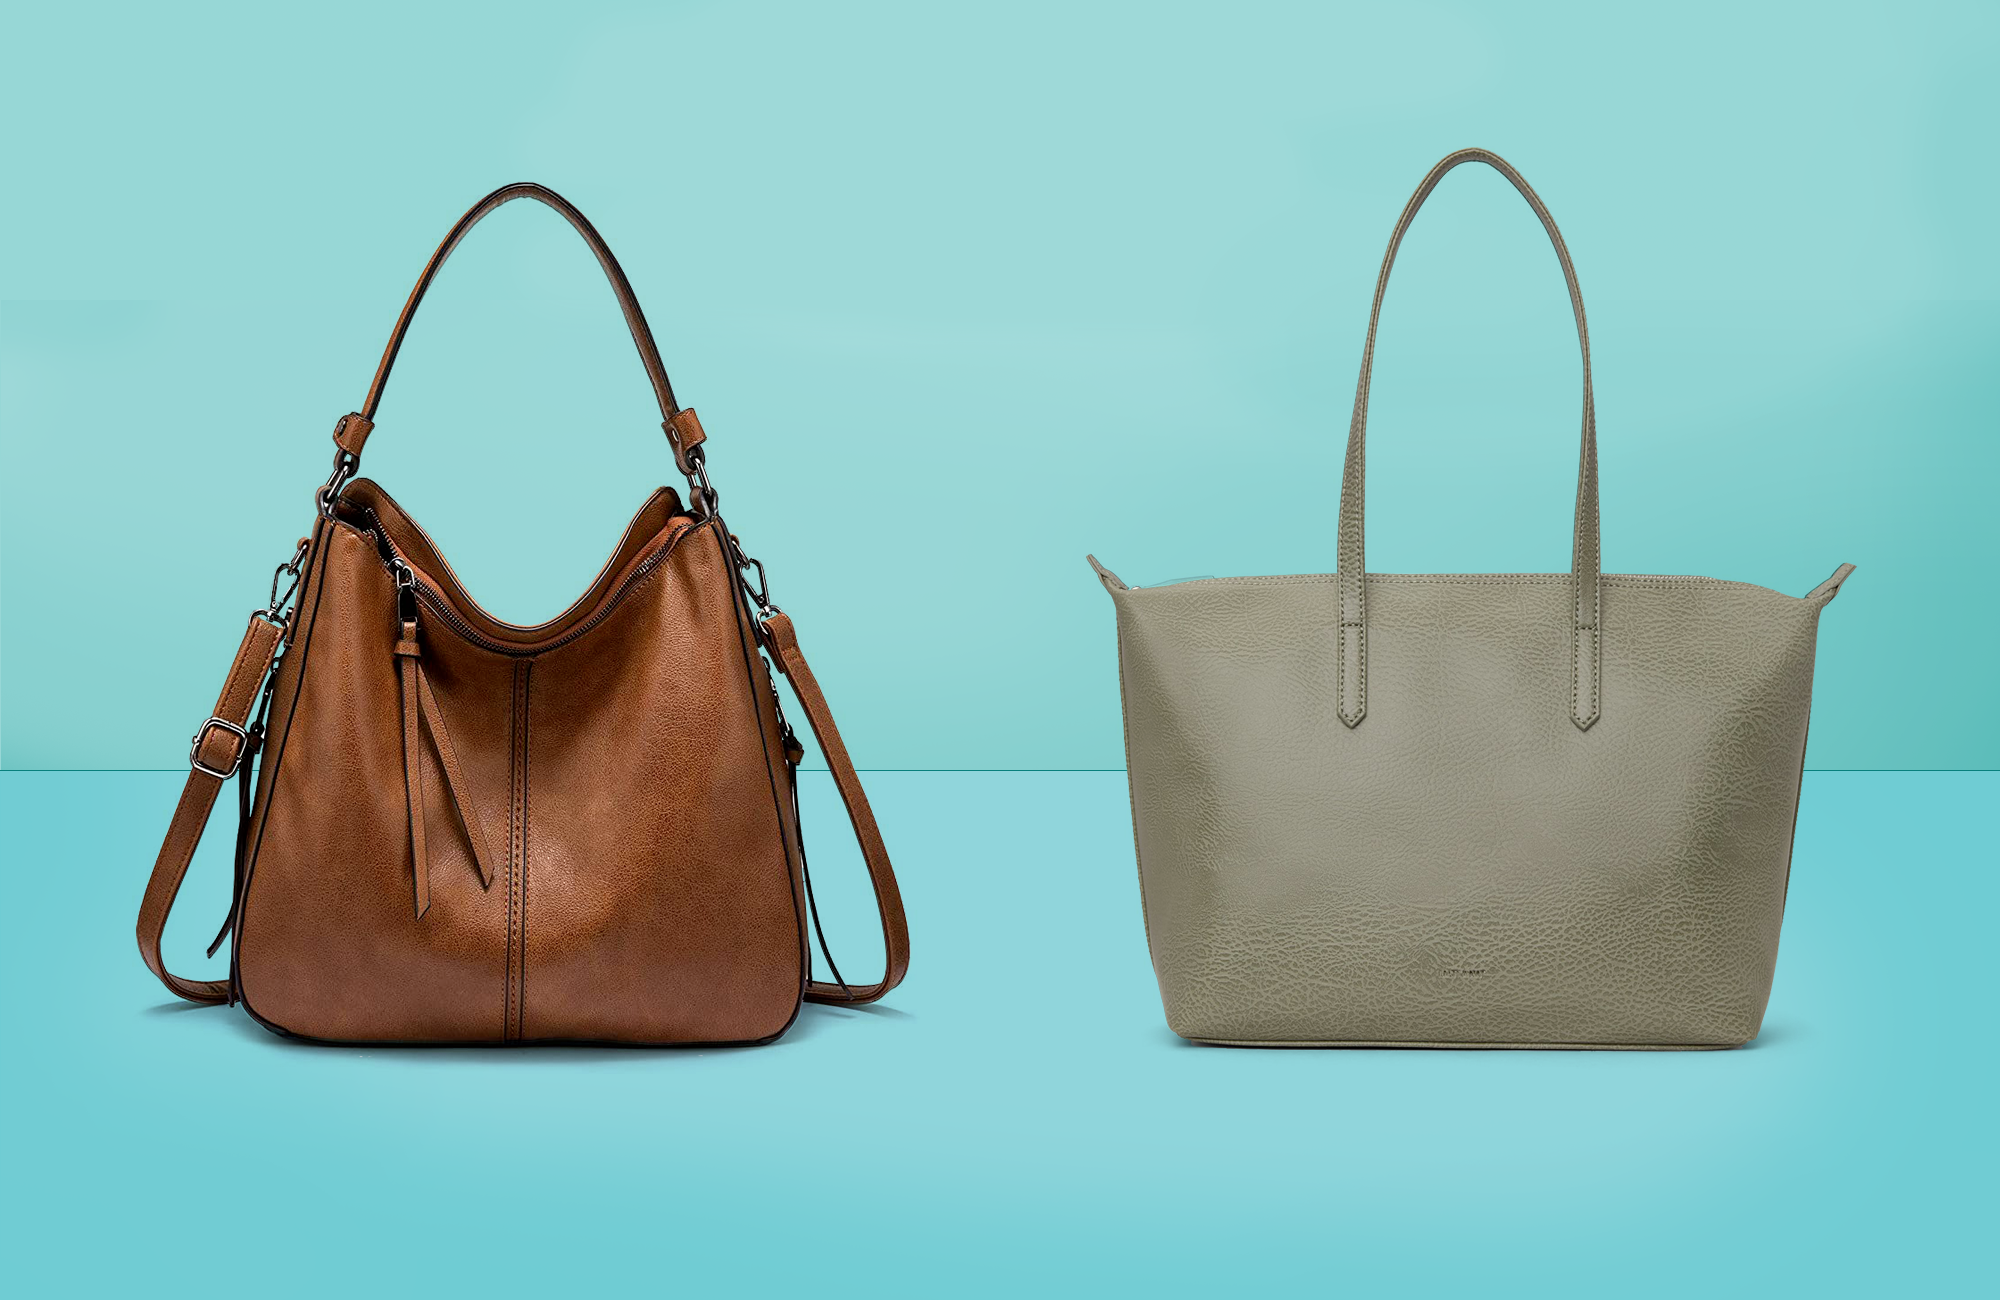 Classy Women Handbag PU Leather Purse Shoulder Bag with Attach Accessory